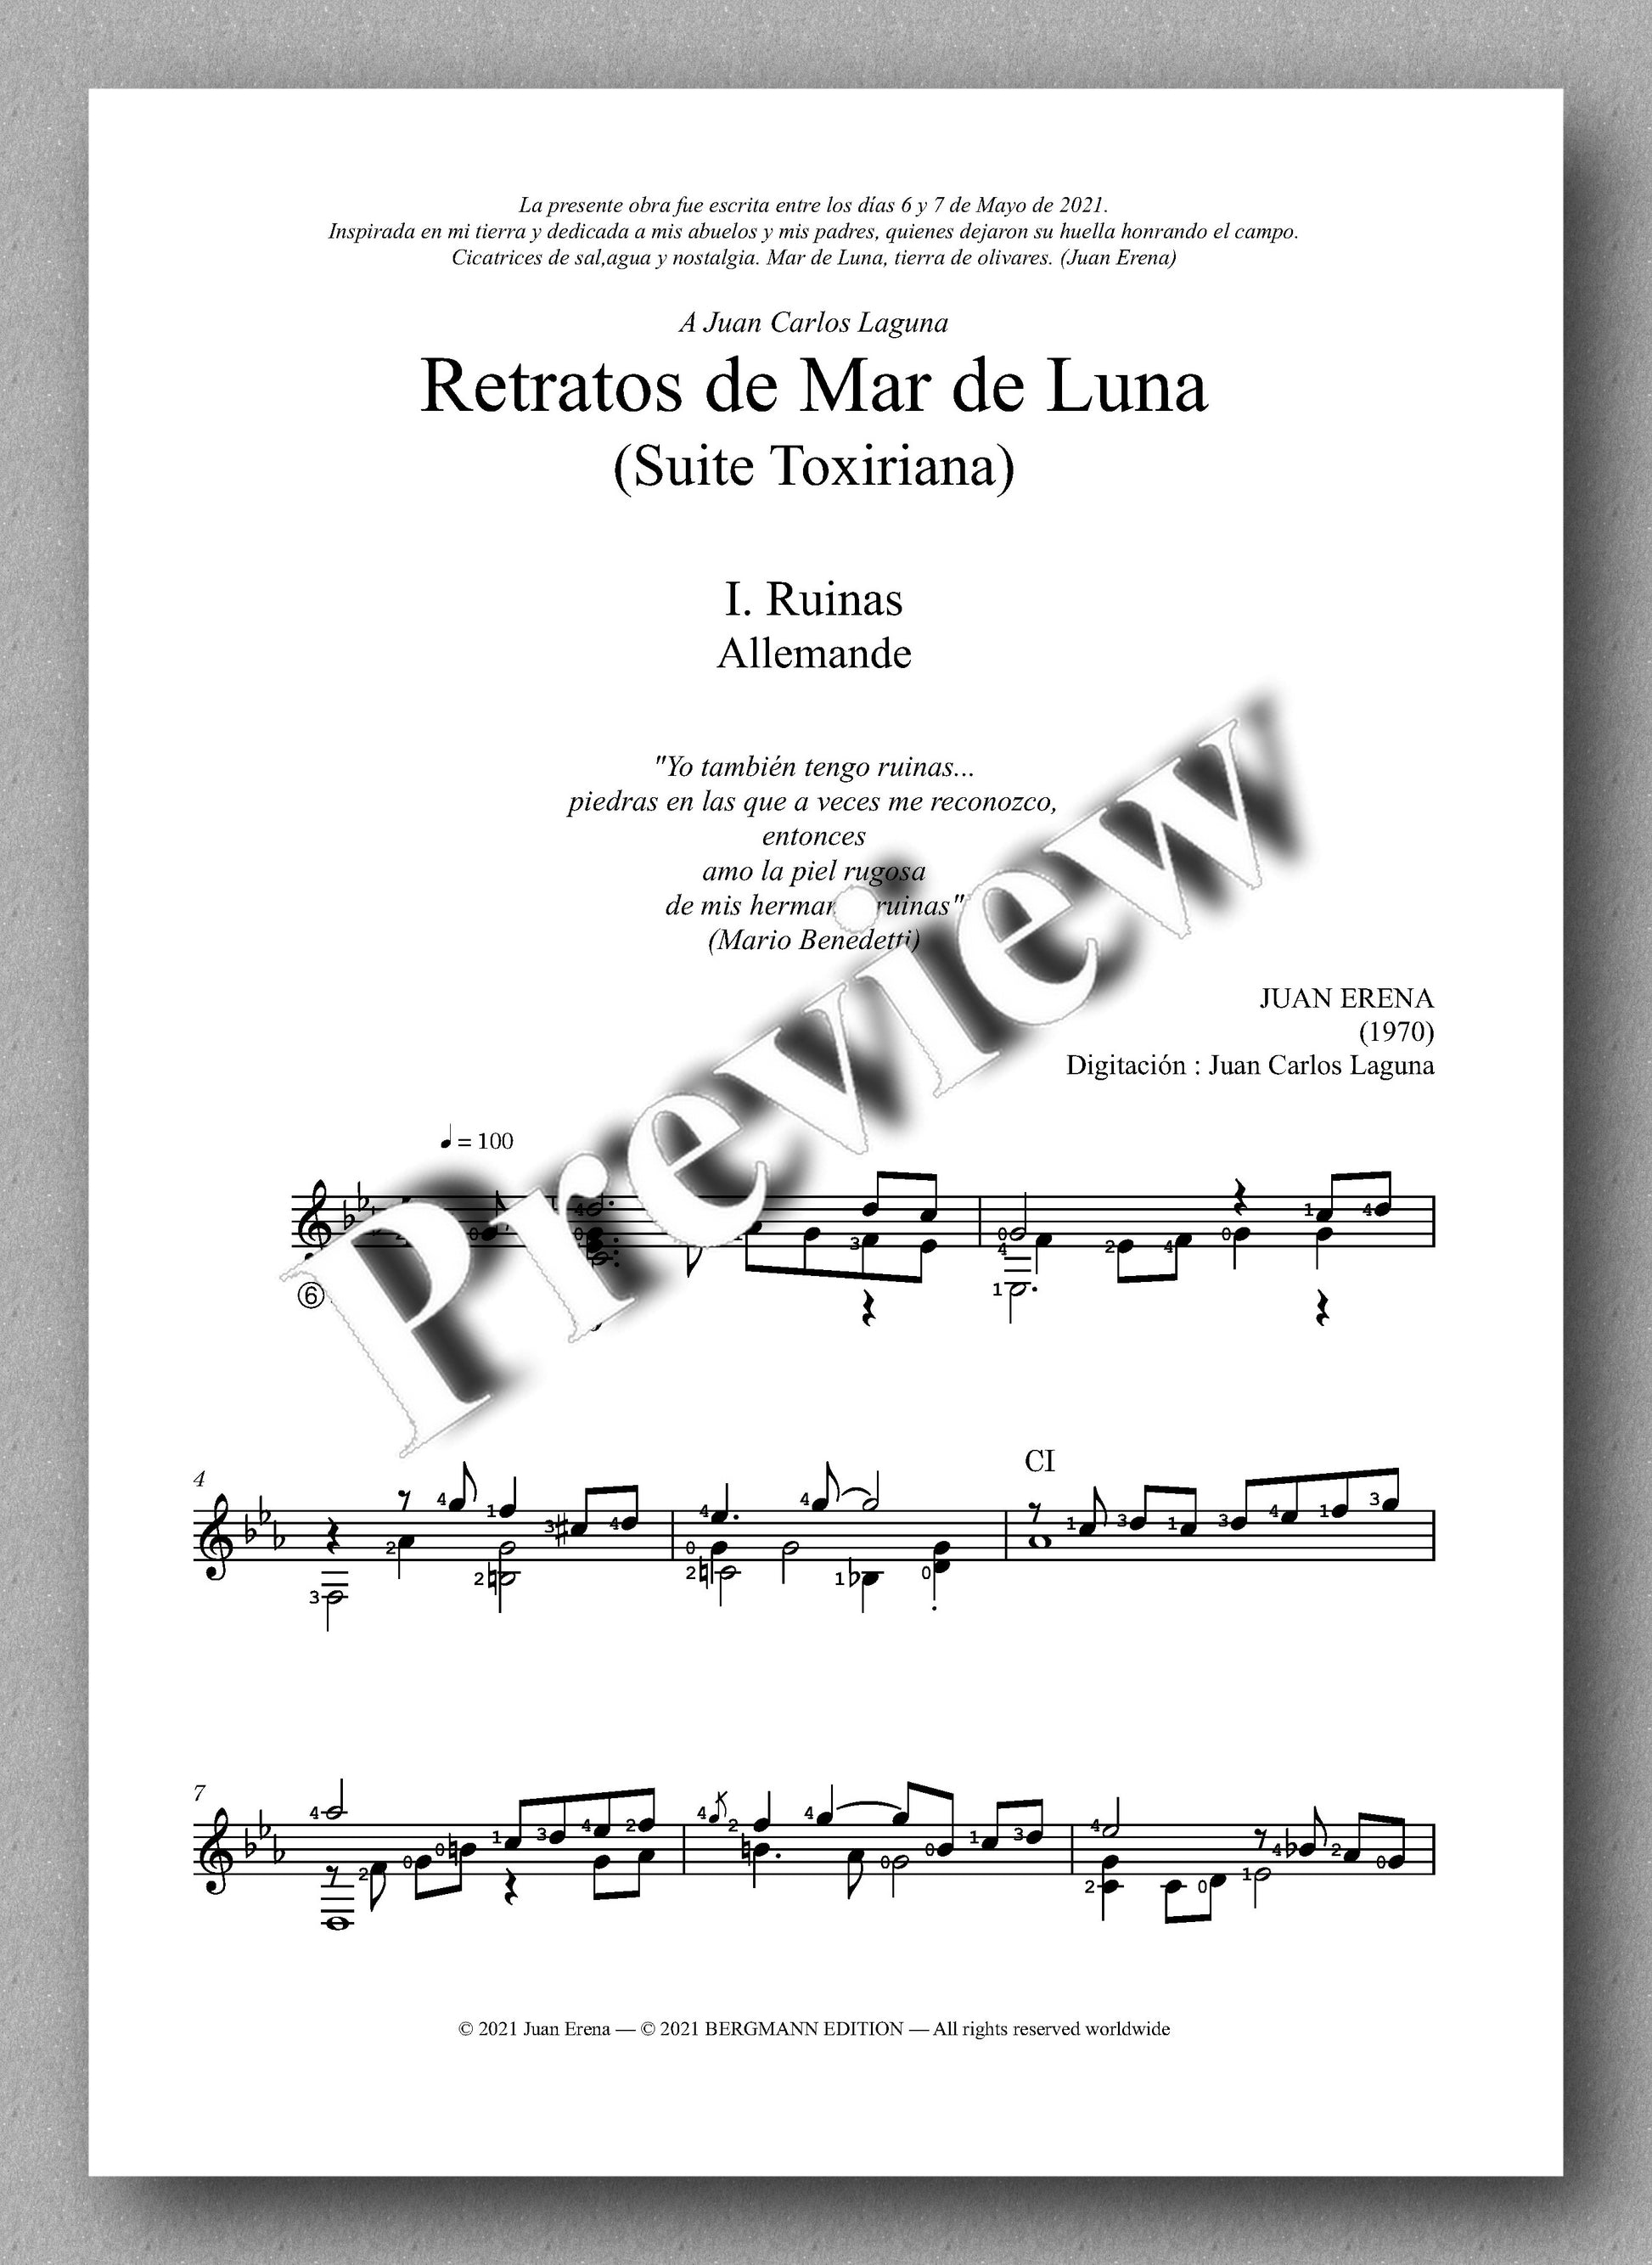 Erena, Retratos de Mar de Luna - Music score 1